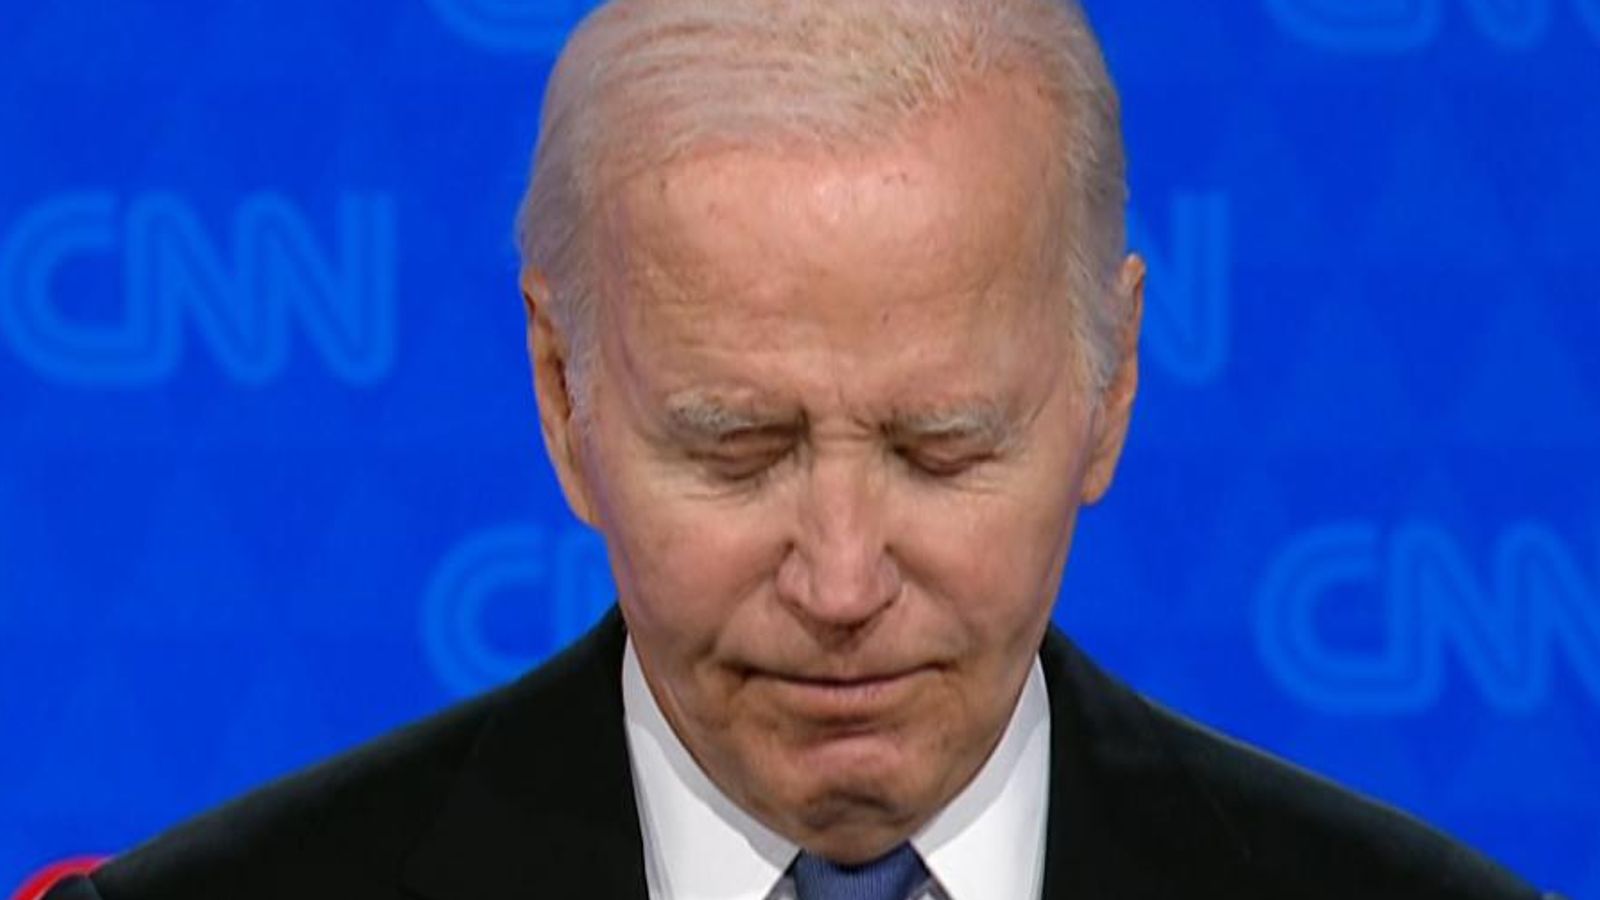 Joe Biden defiantly vows to stay in US presidential race